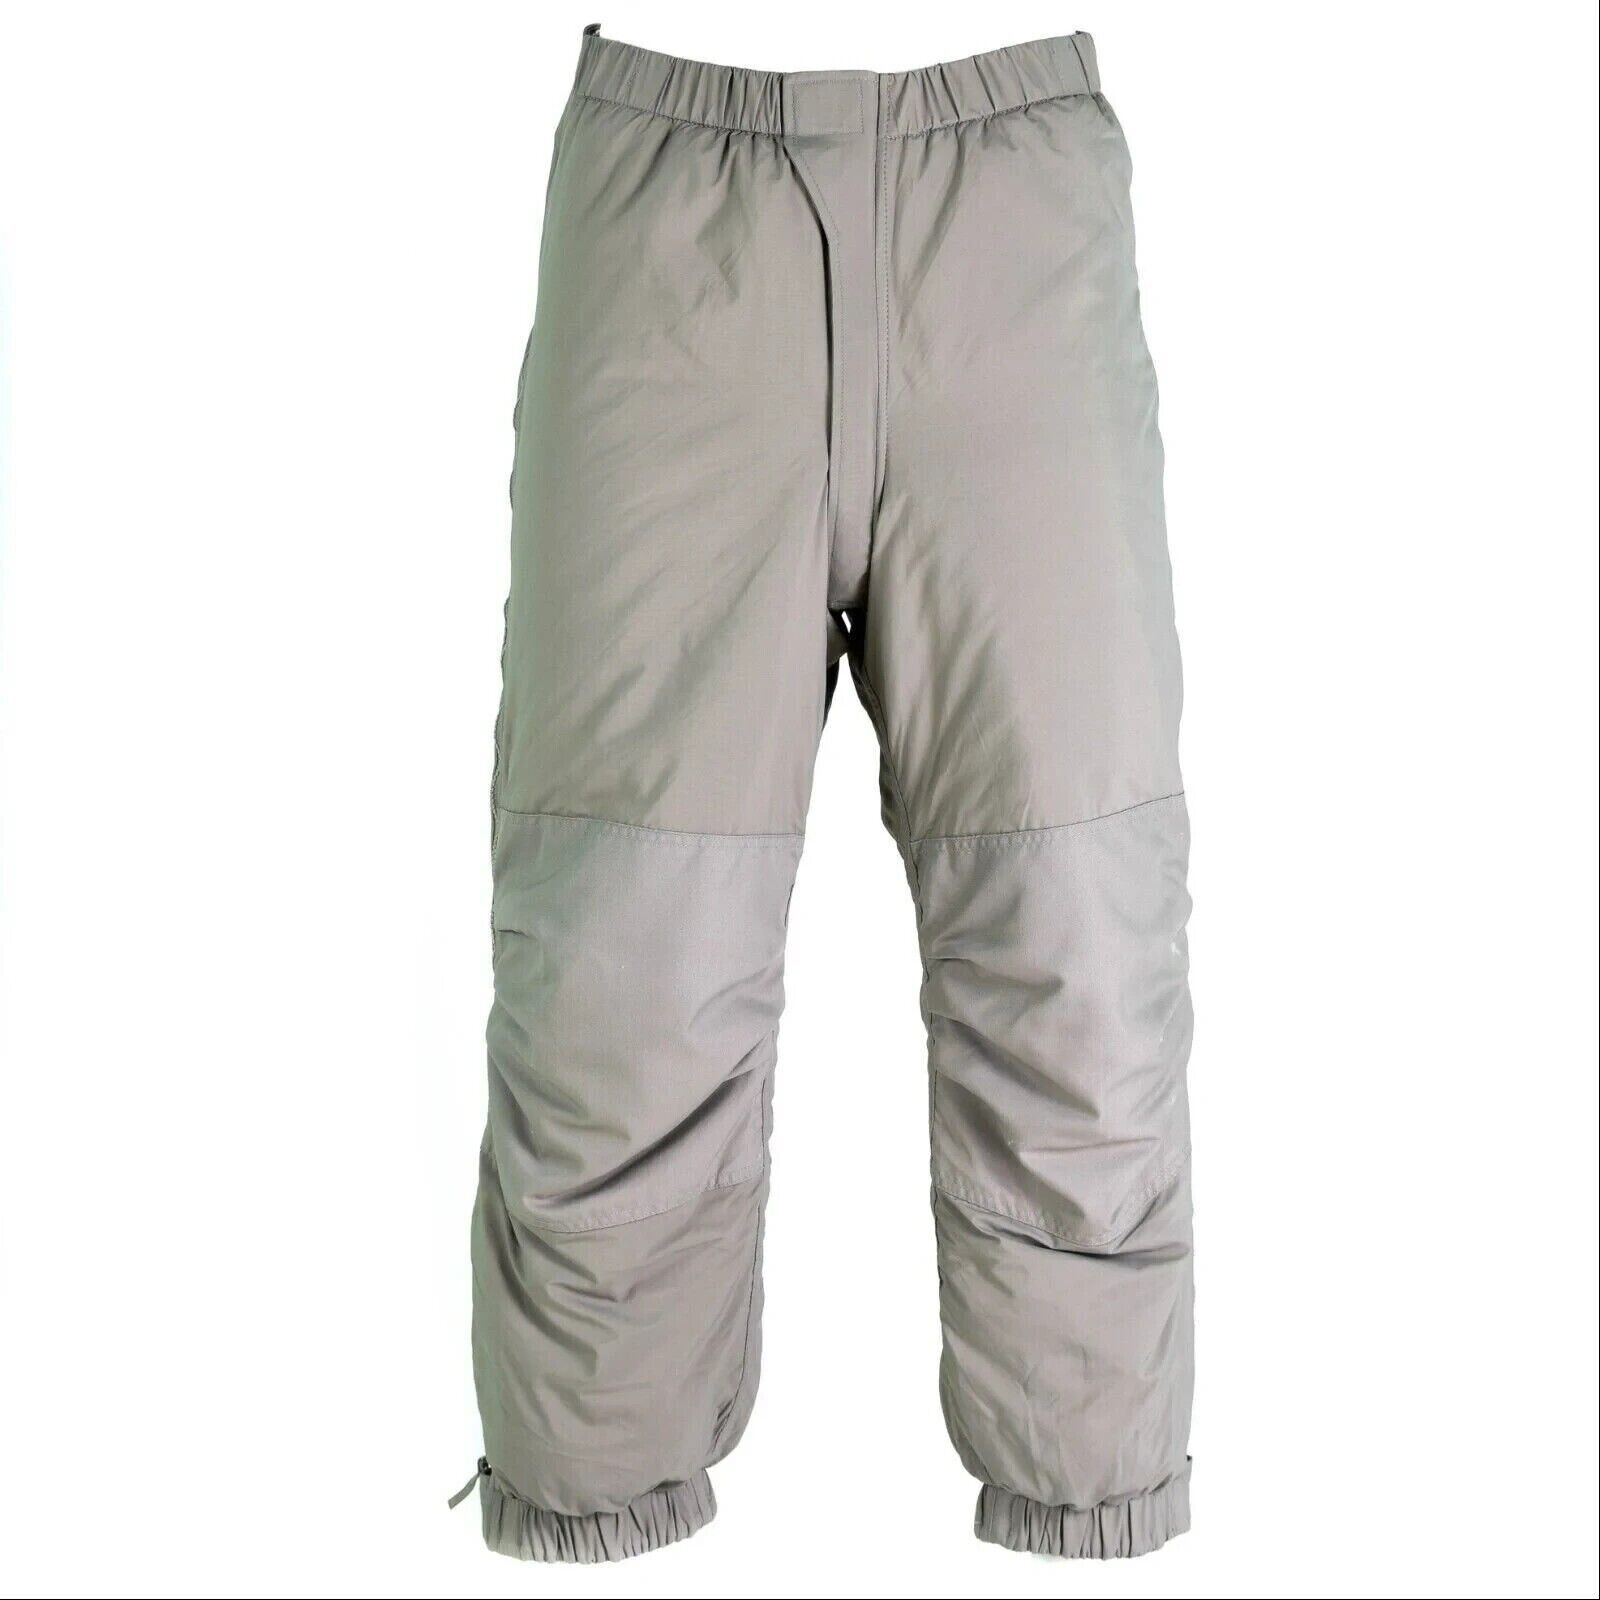 USGI Extreme Cold Weather Trousers Pants GEN III ECWCS Medium Regular